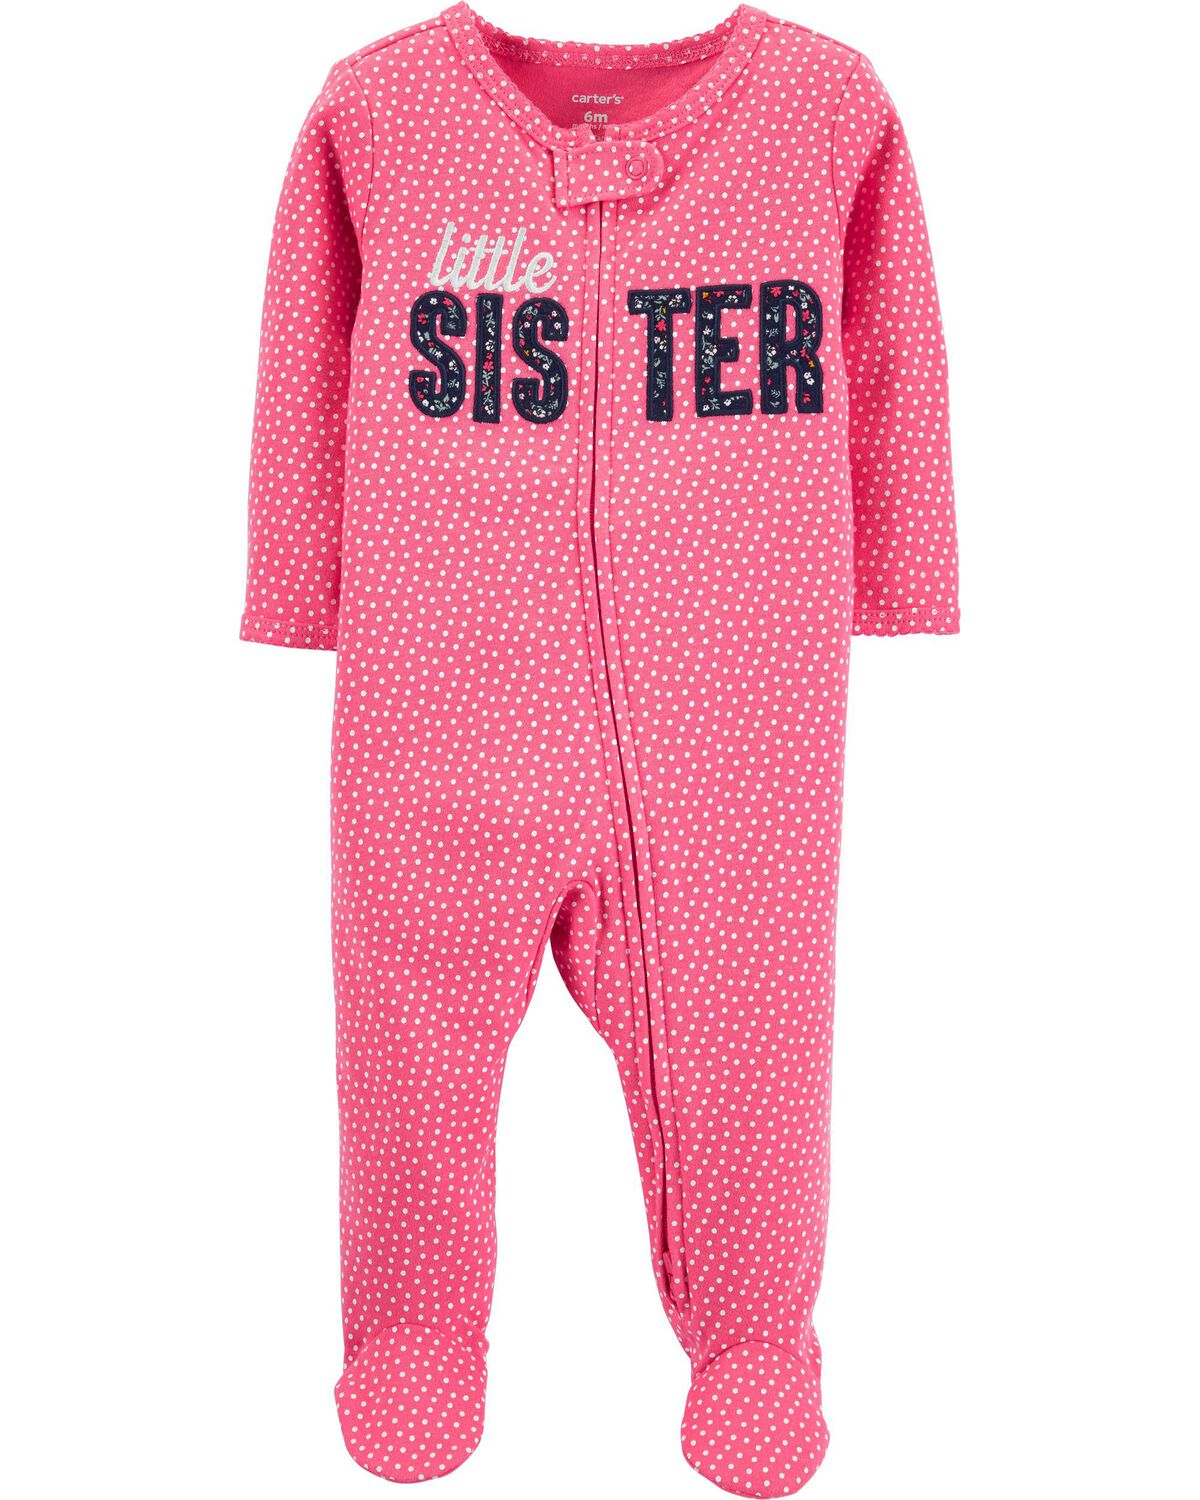 Baby Little Sister 2-Way Zip Cotton Sleep & Play Pajamas